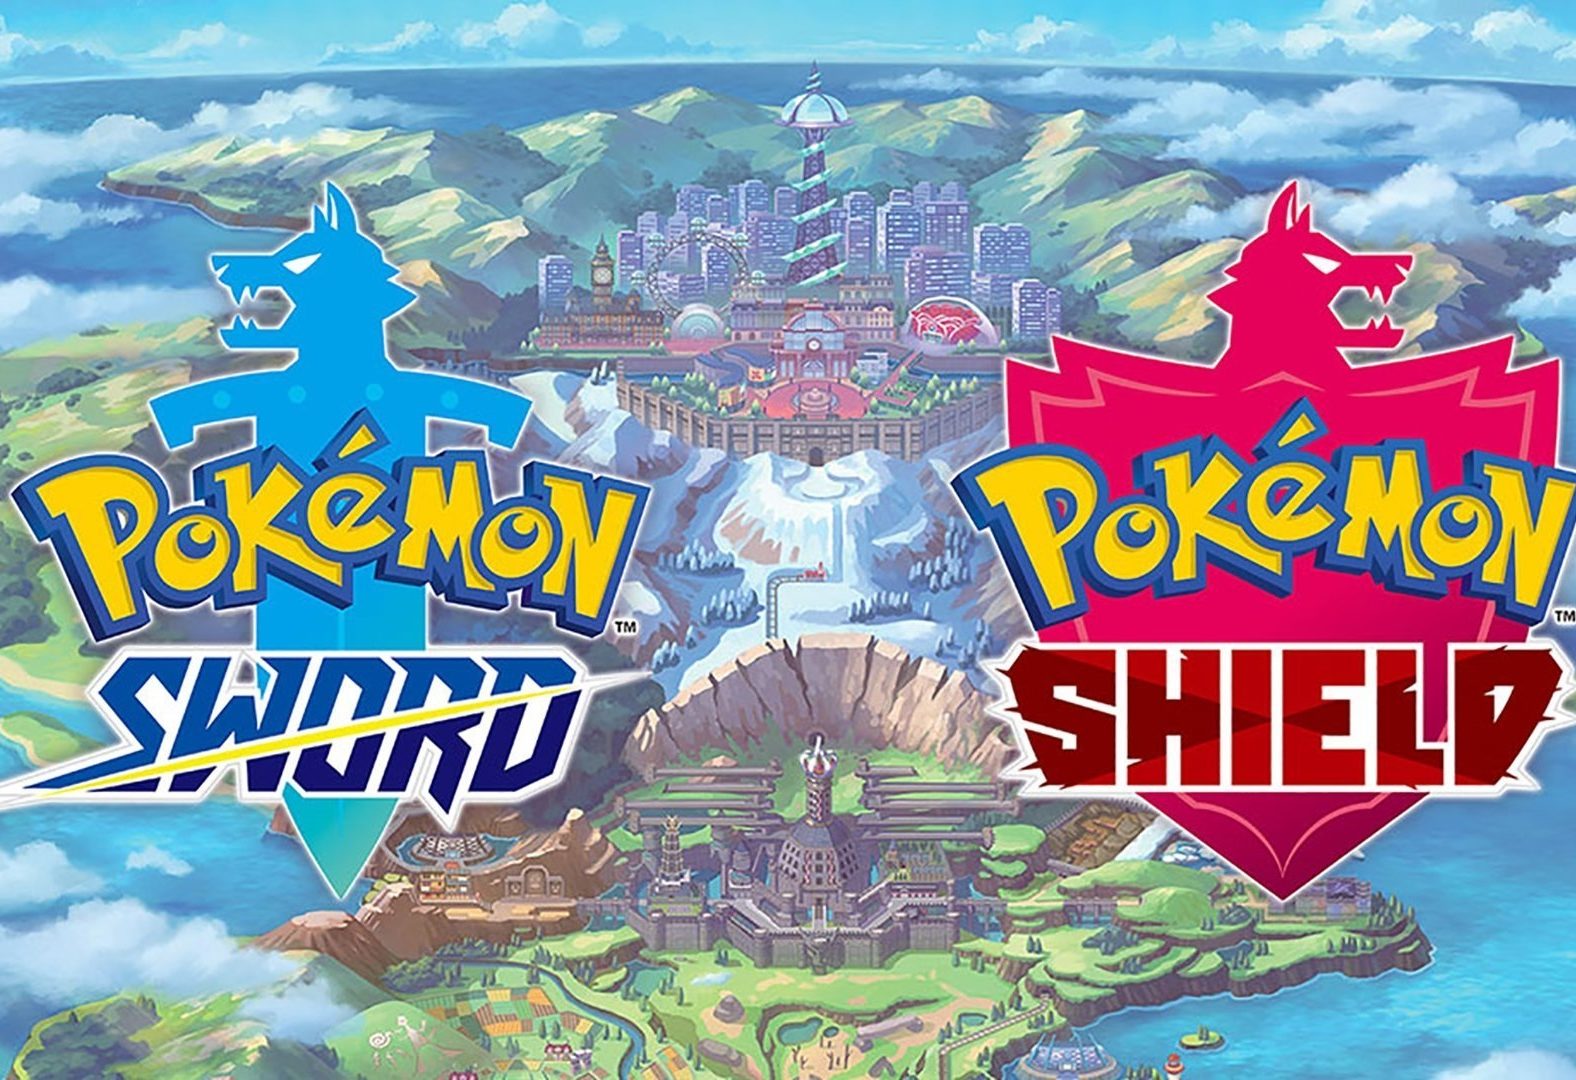 Pokémon Sword and Shield arrive worldwide on November 15, 2019